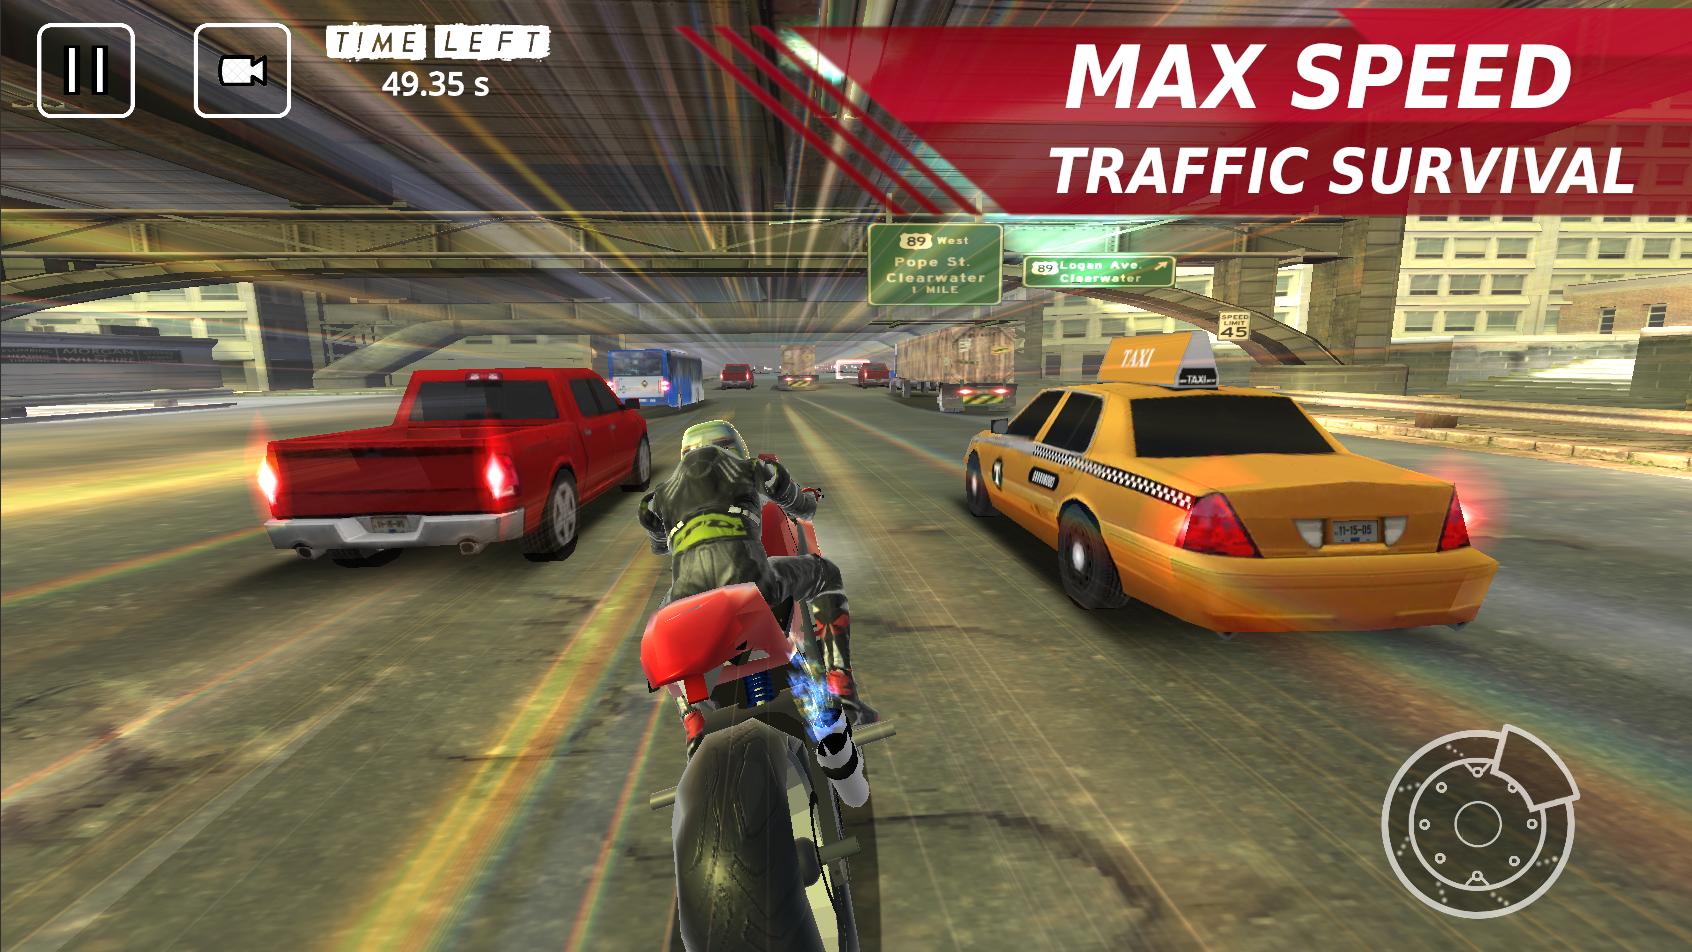 Rebel Gears Drag Bike Racing / CSR Race Moto Game 1.3.2 Screenshot 5